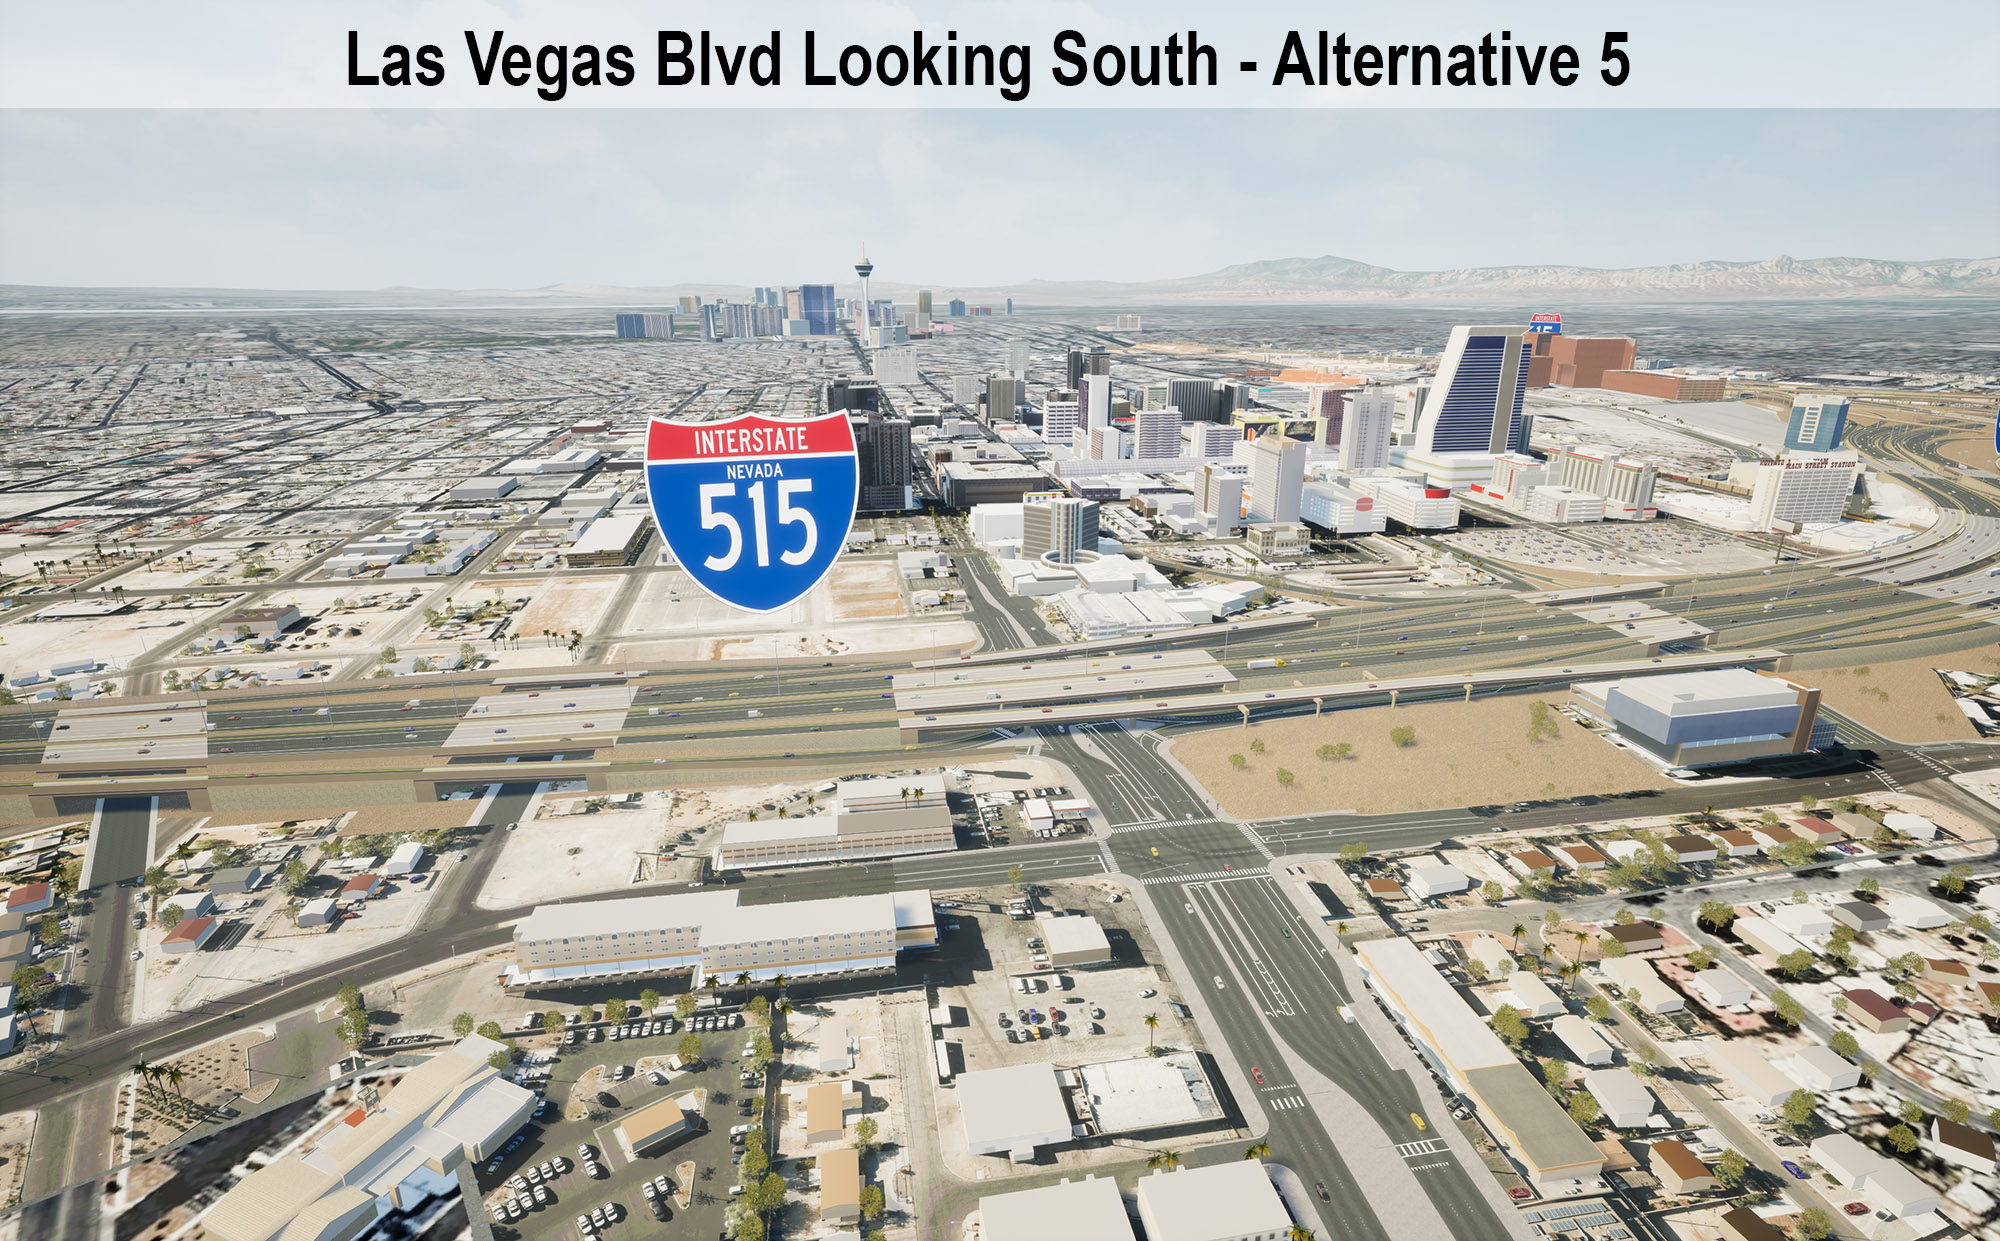 Las Vegas Blvd Looking South - Alternative 5